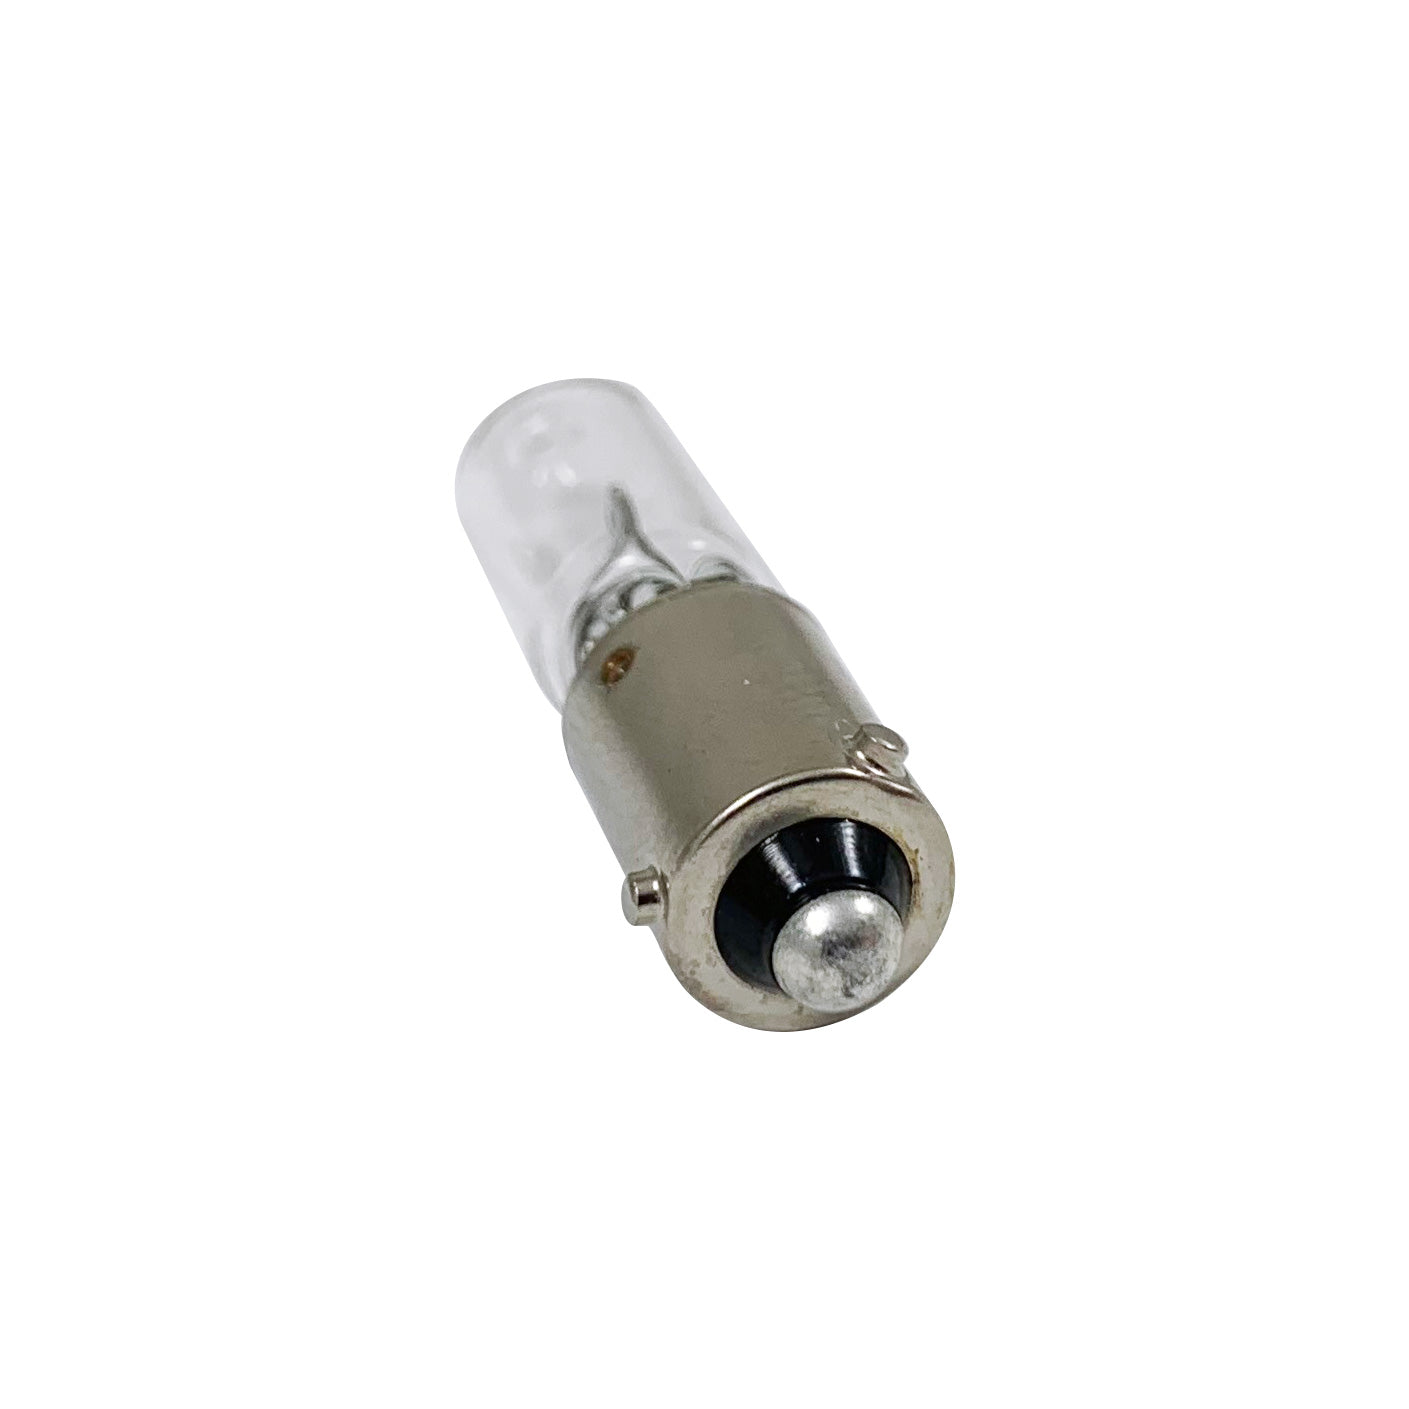 LED bulb 64136 - H21W with 10 white CREE leds